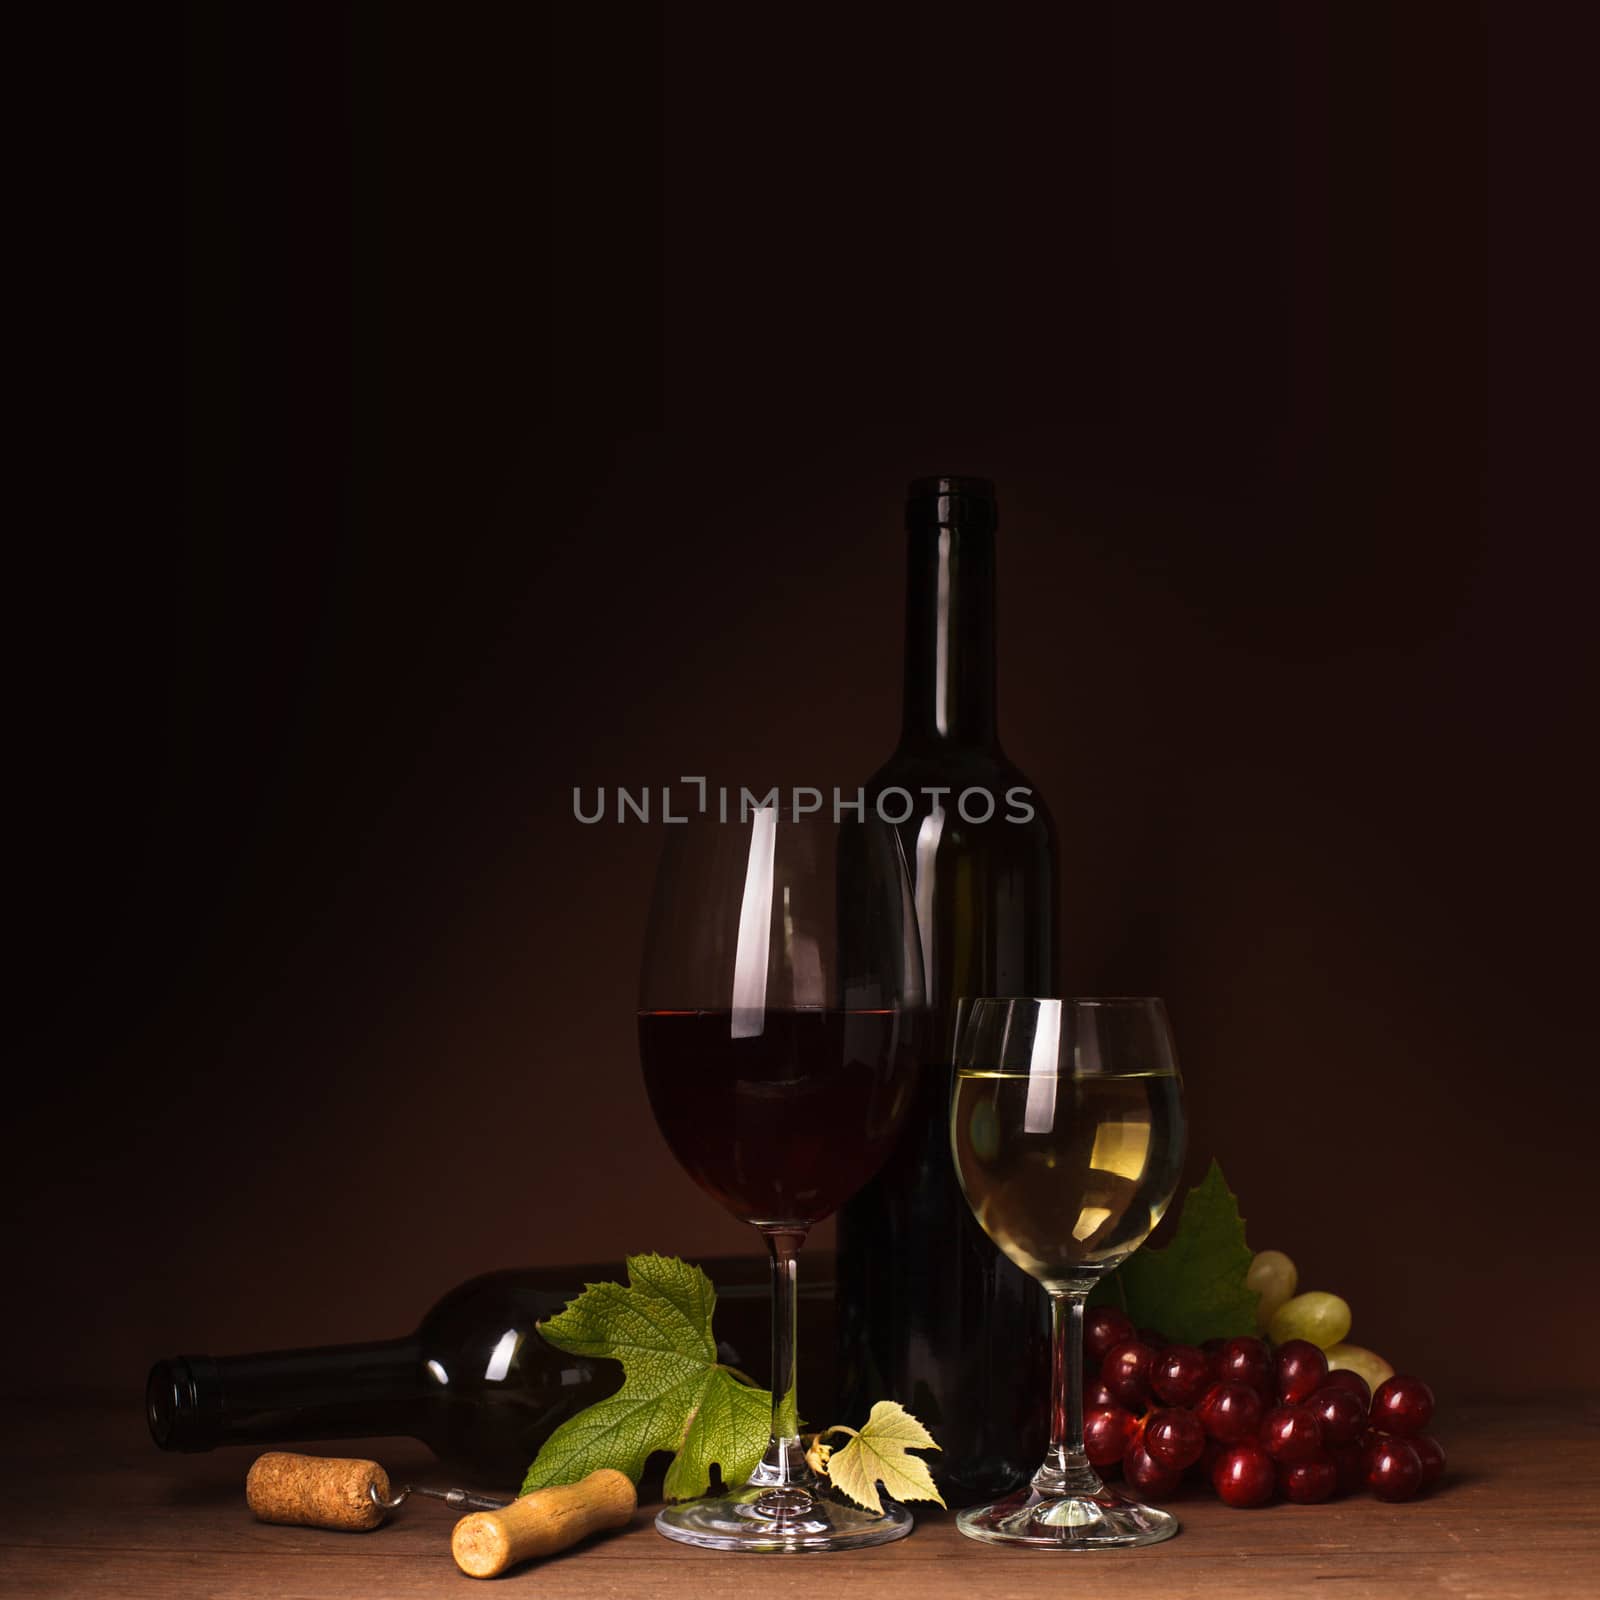 Wine still life: bottles, corks, grapes and glasses